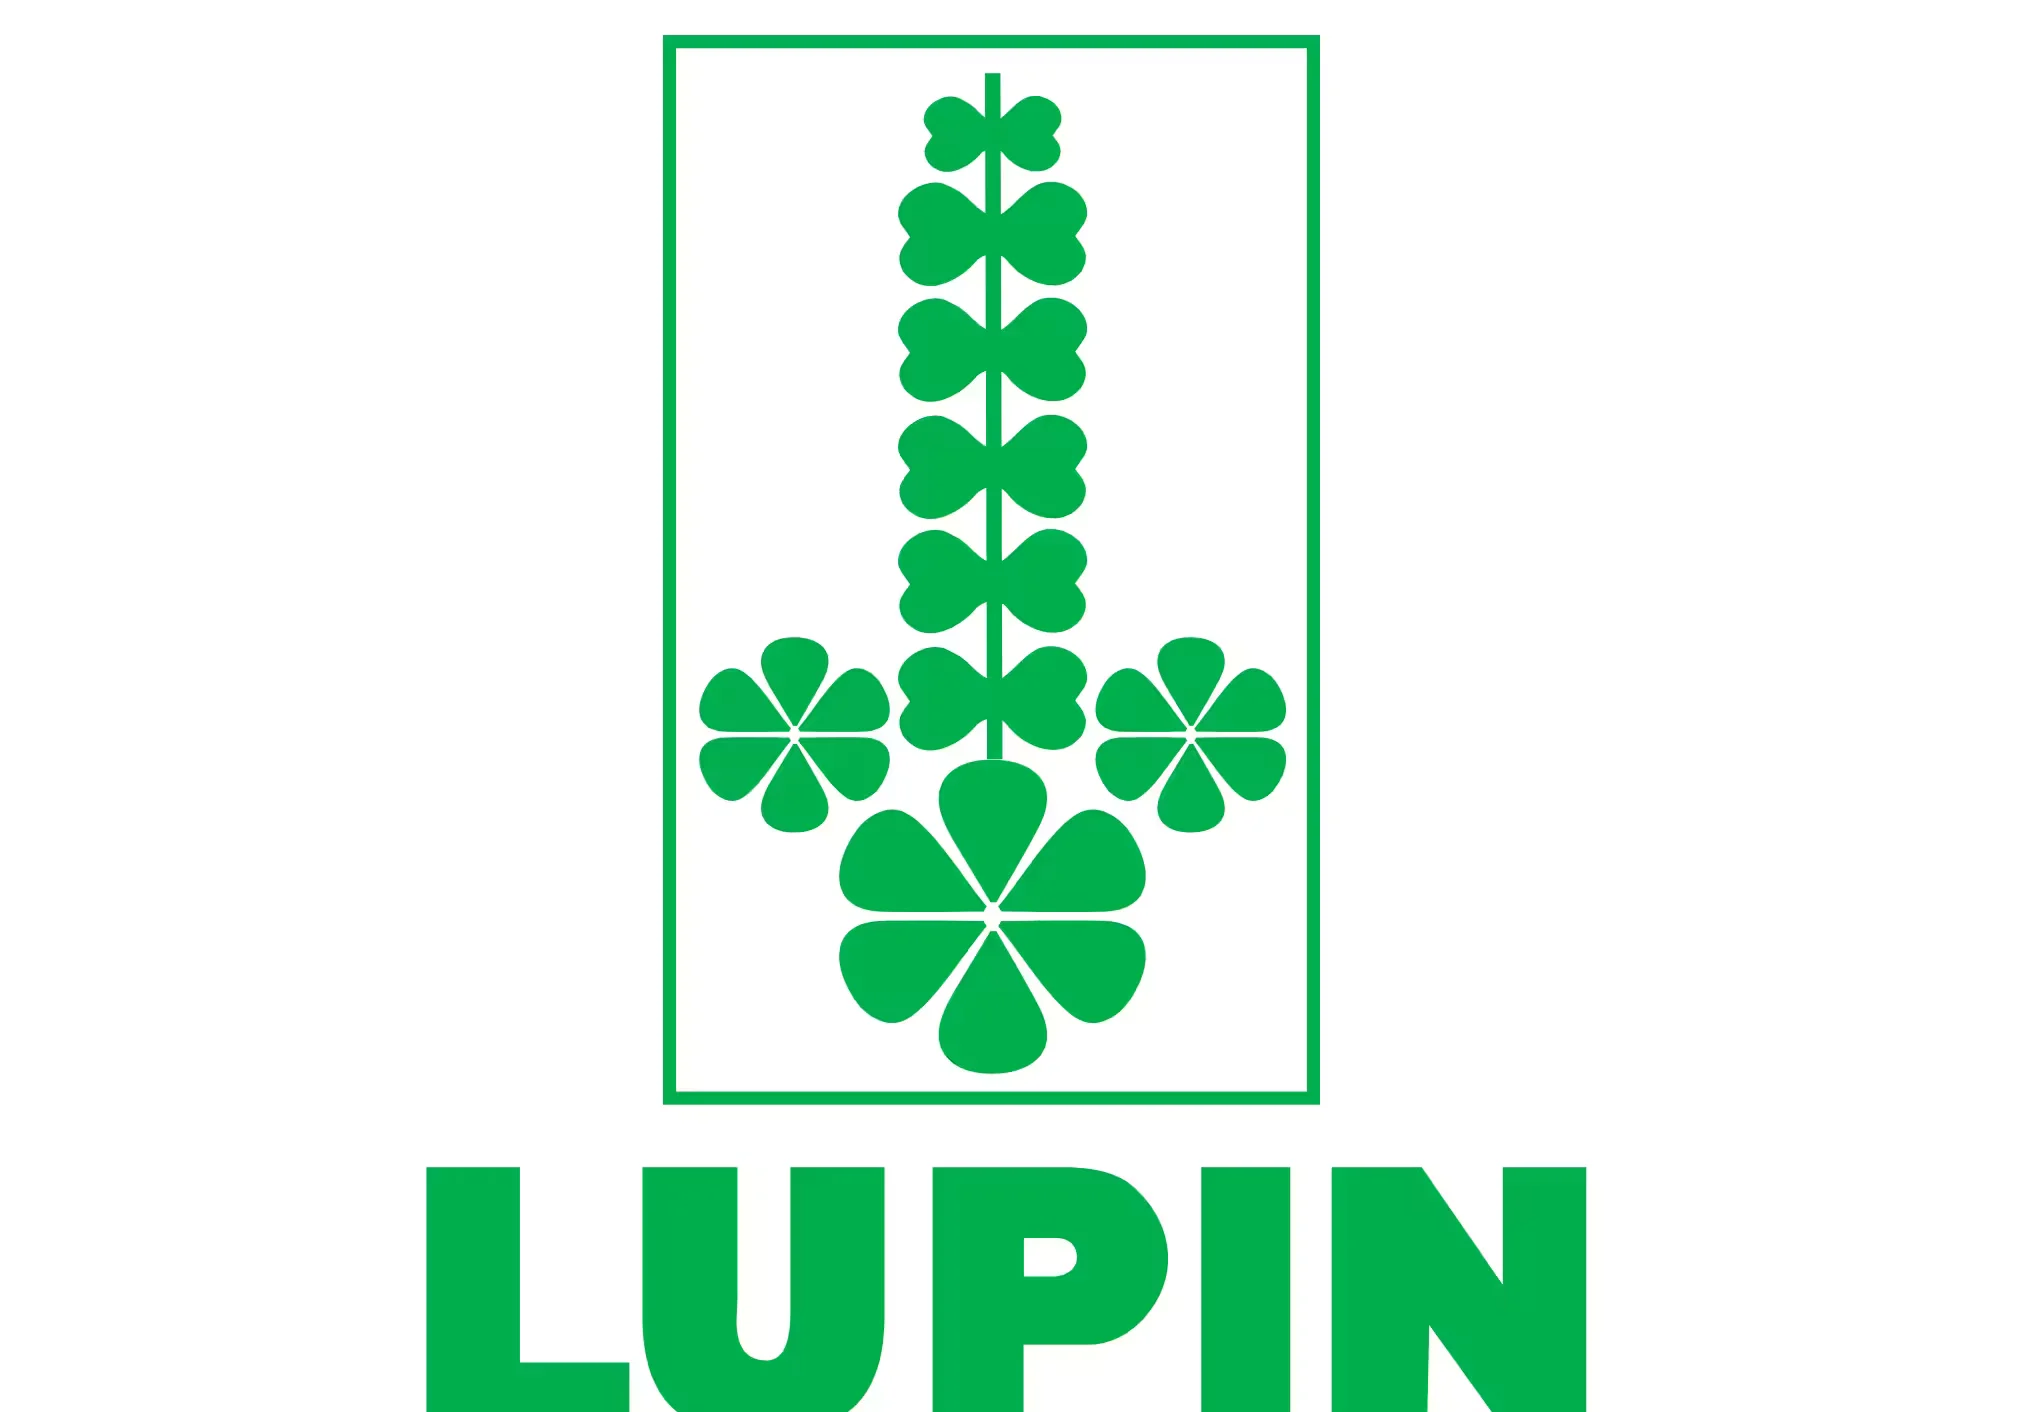 Lupin Gets USFDA Nod For Generic Loteprednol Etabonate Ophthalmic Suspension